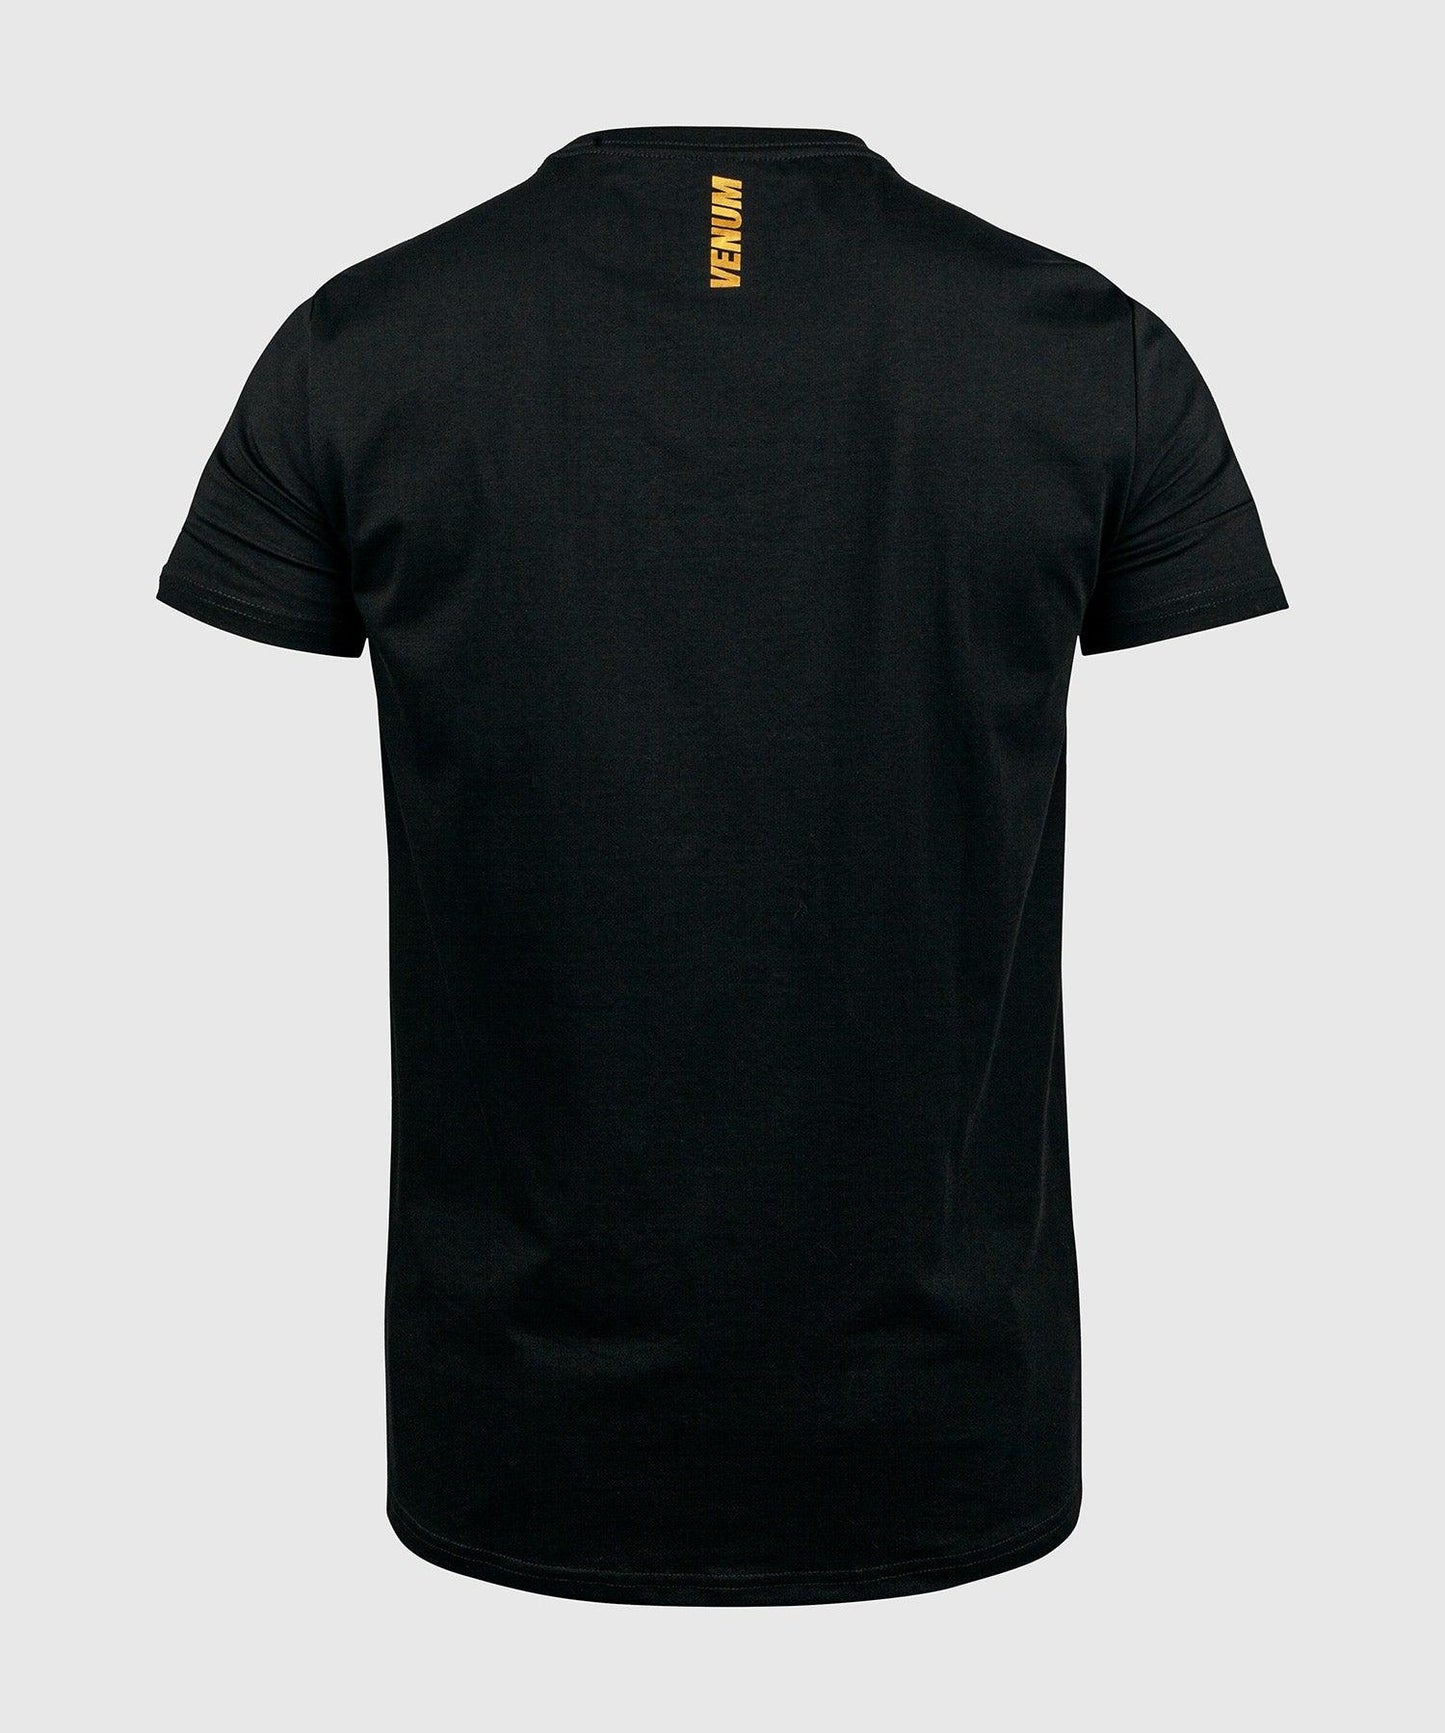 Venum MMA VT T-shirt - Black/Gold Picture 2